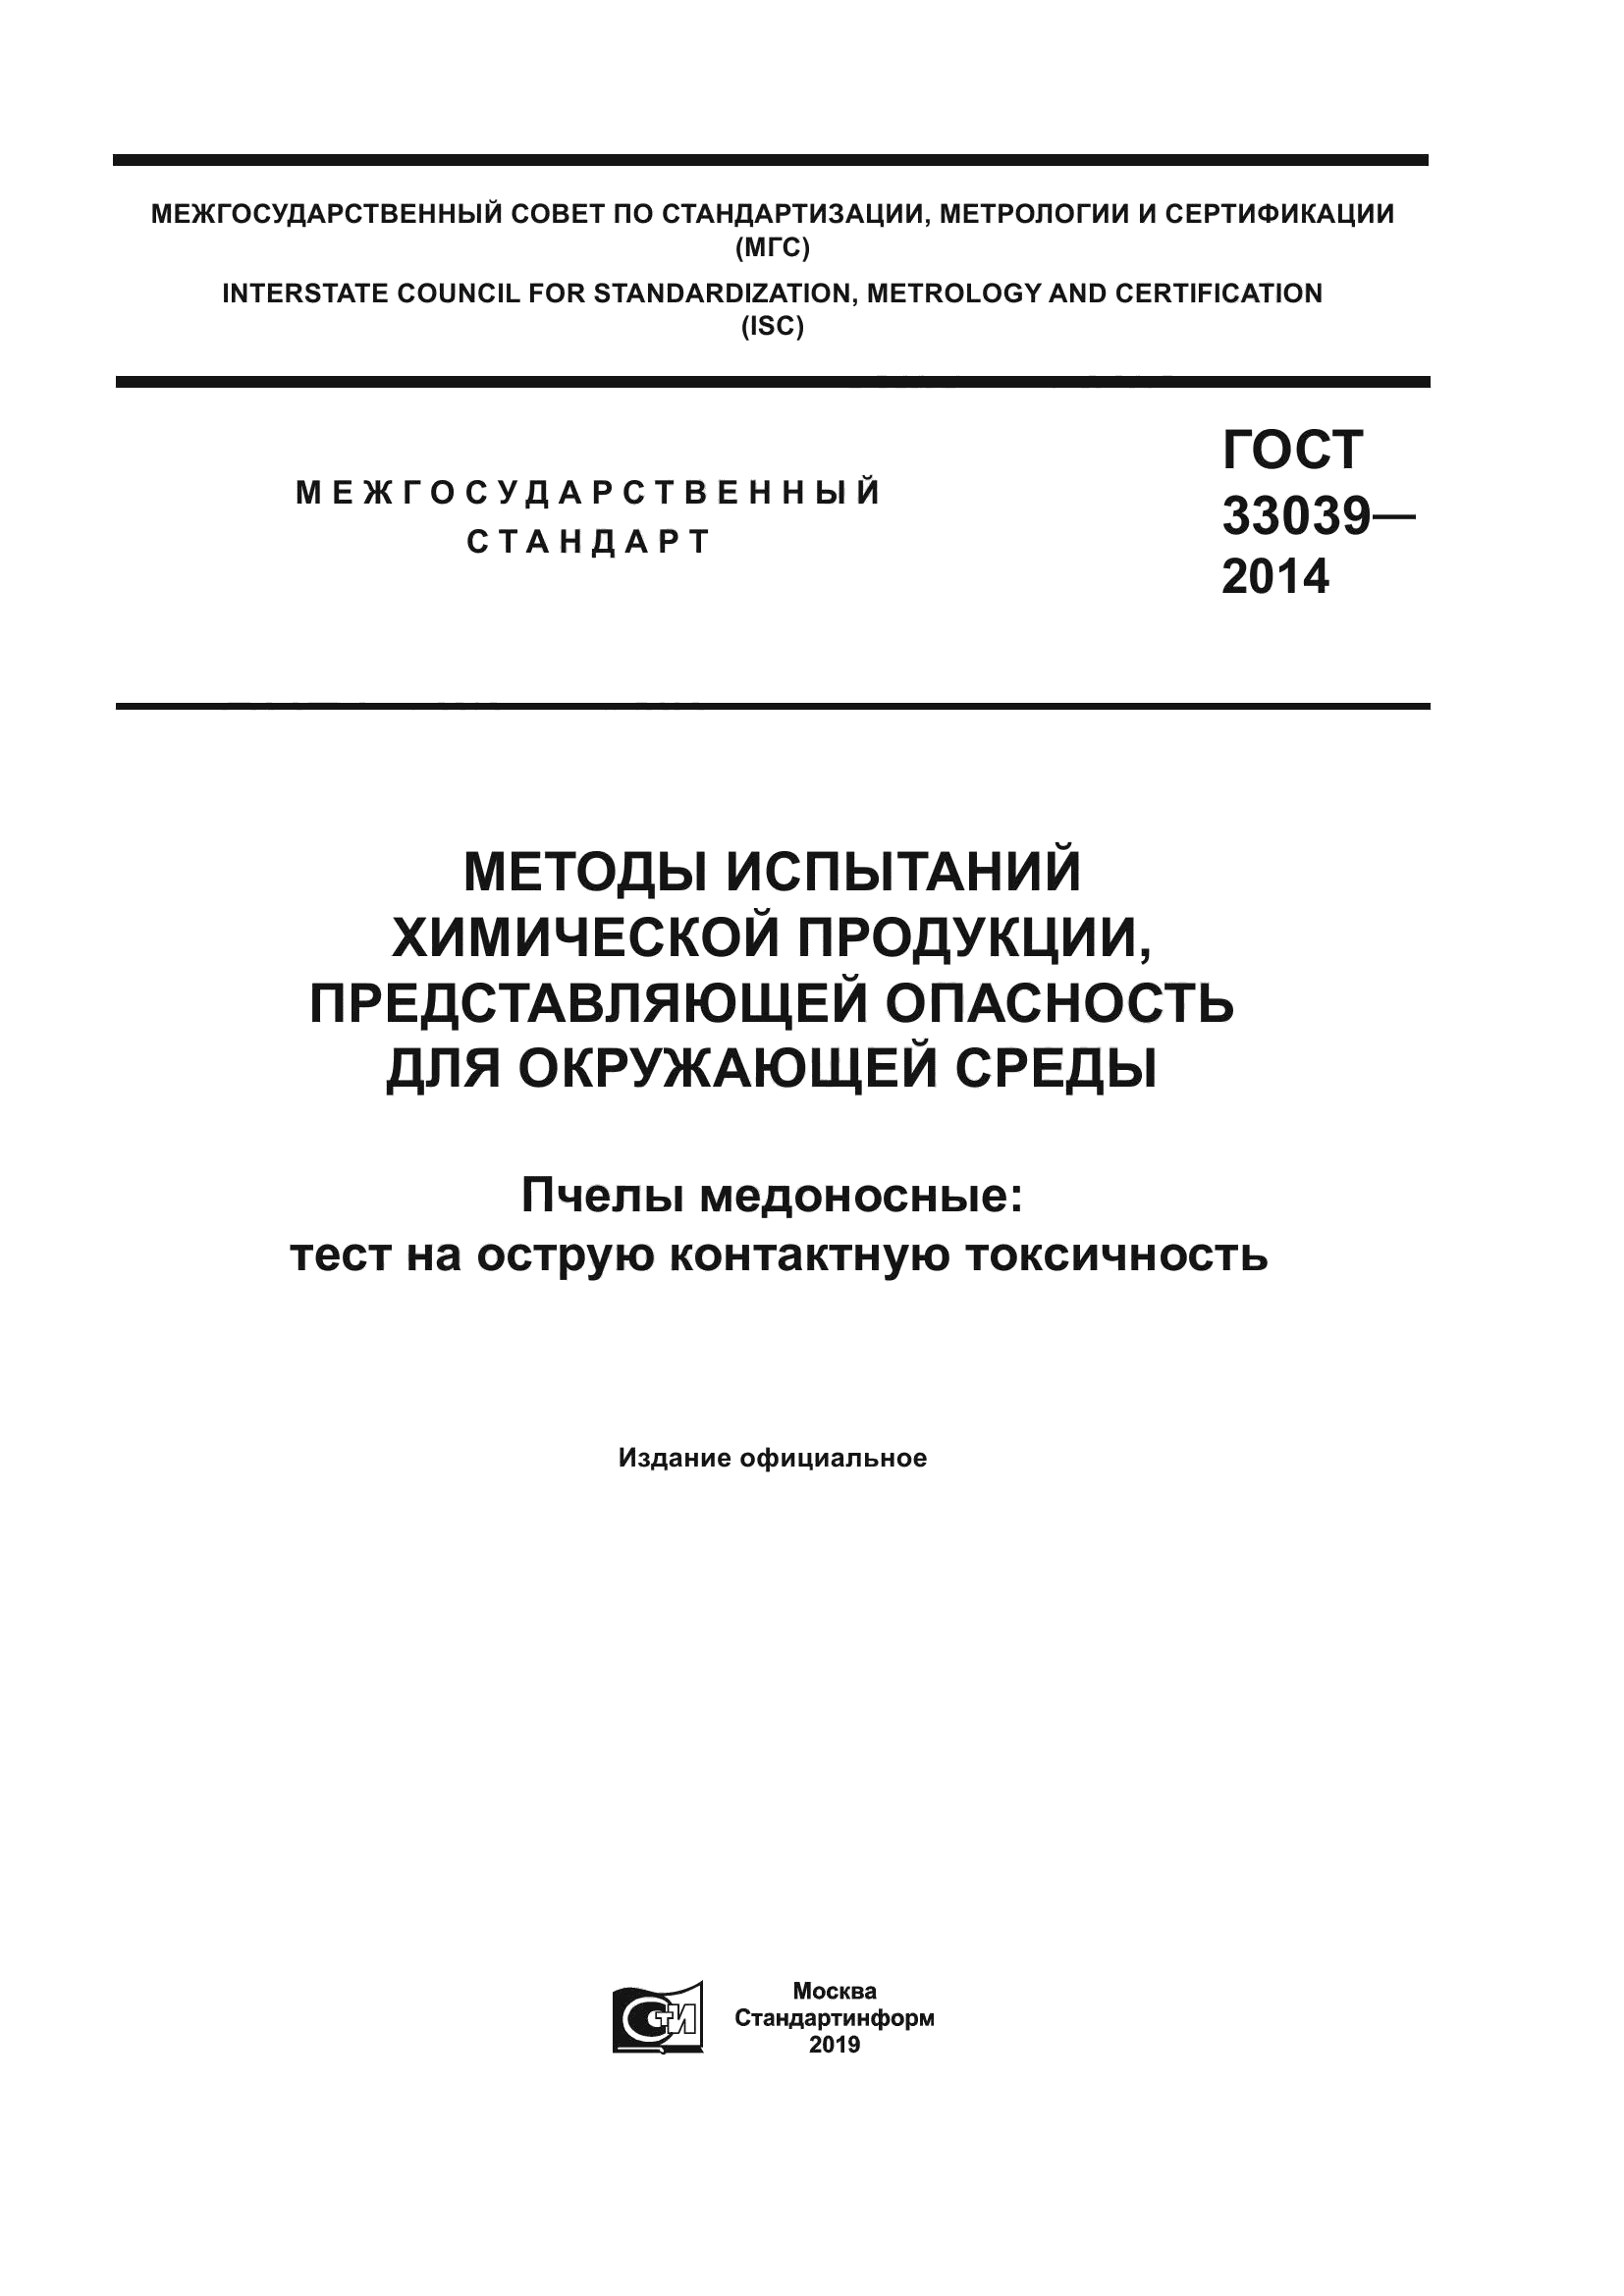 ГОСТ 33039-2014